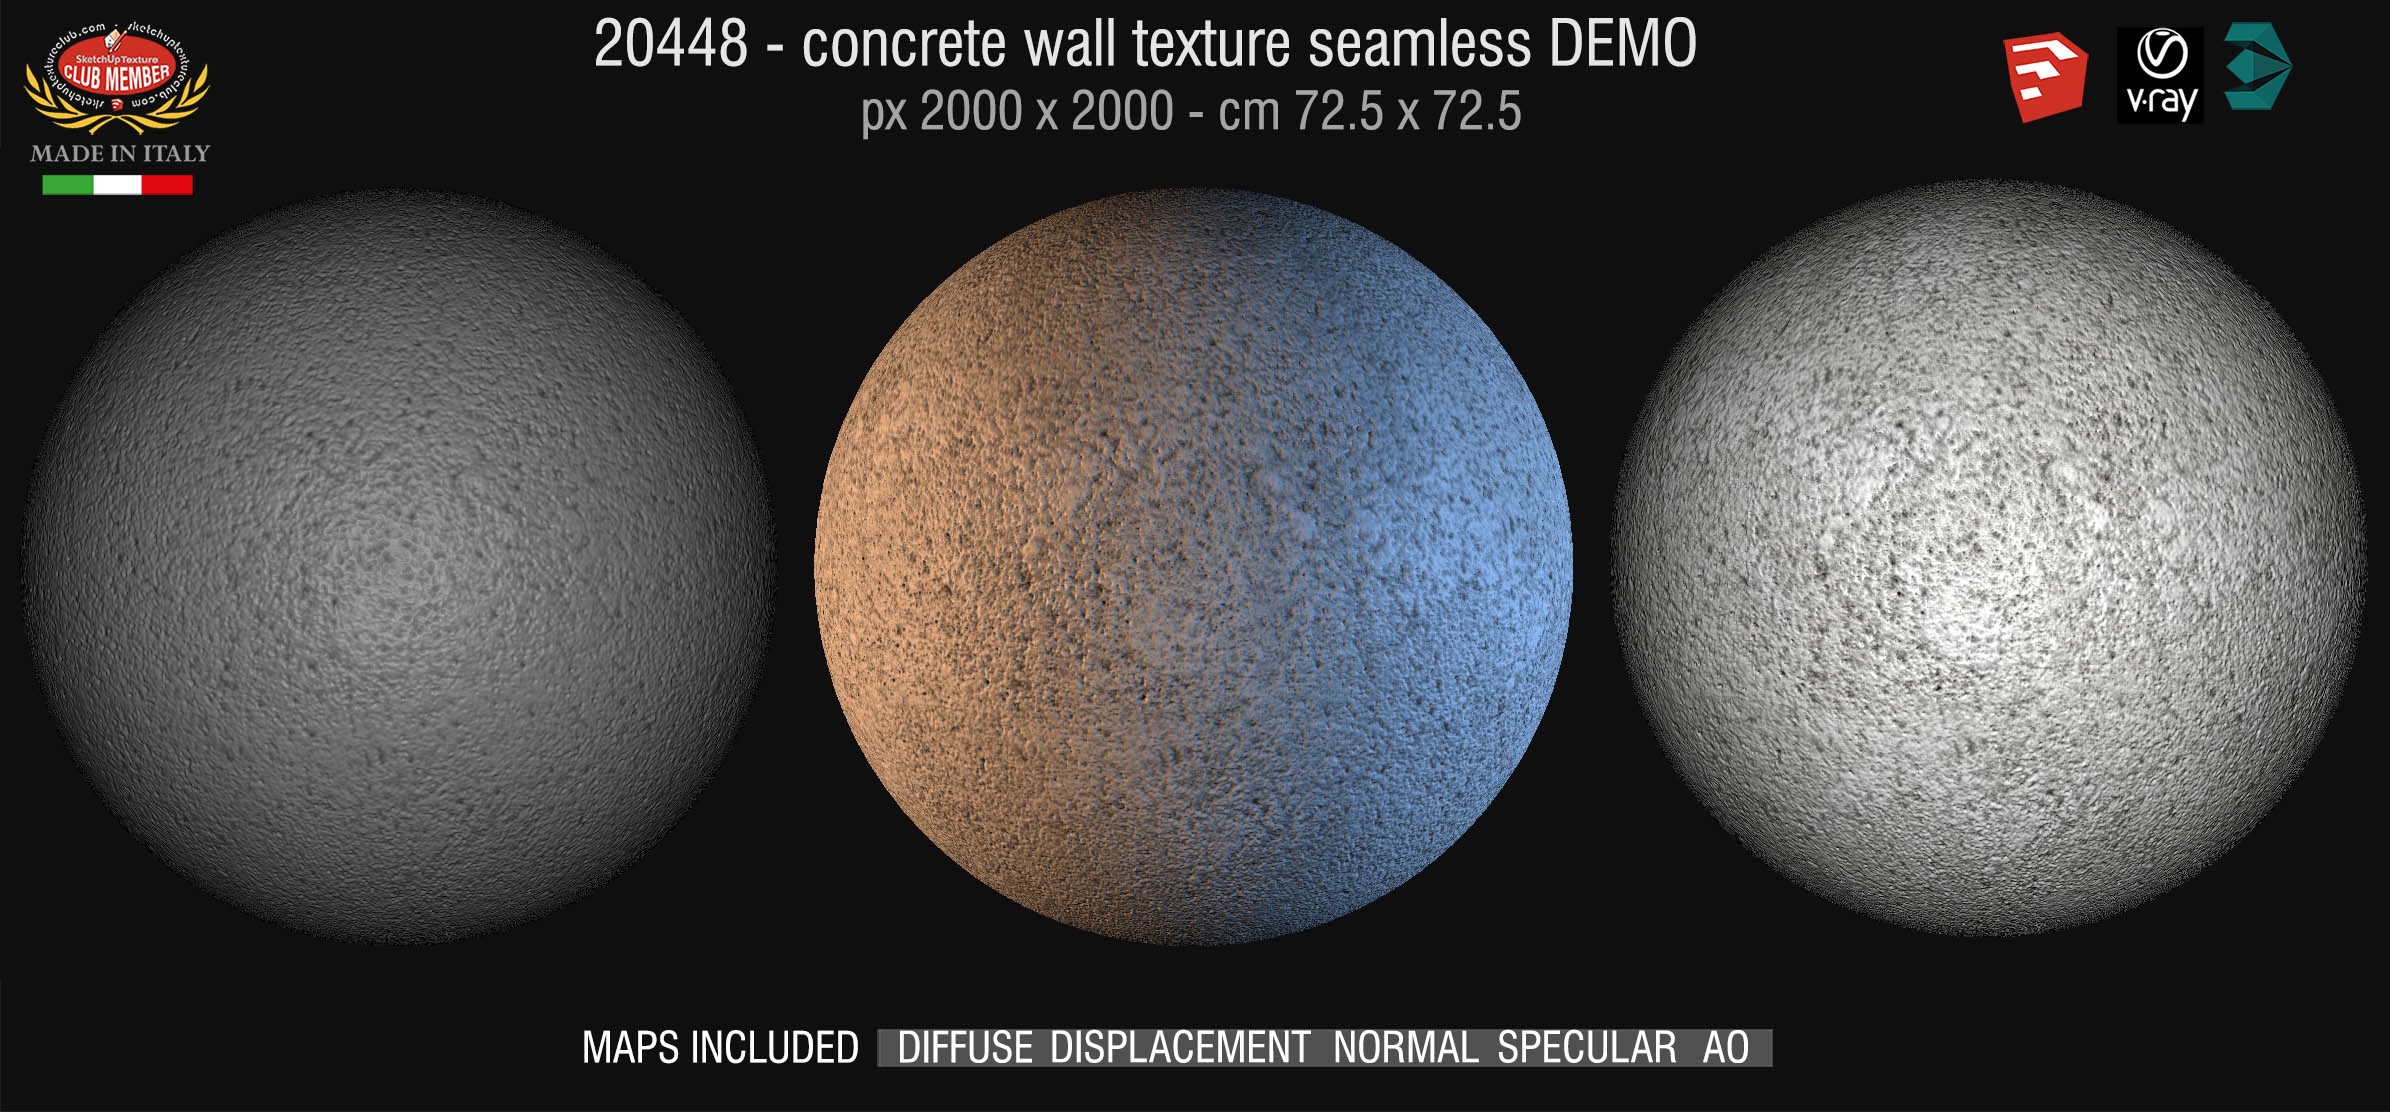 20448 HR Concrete wall texture seamless + maps DEMO